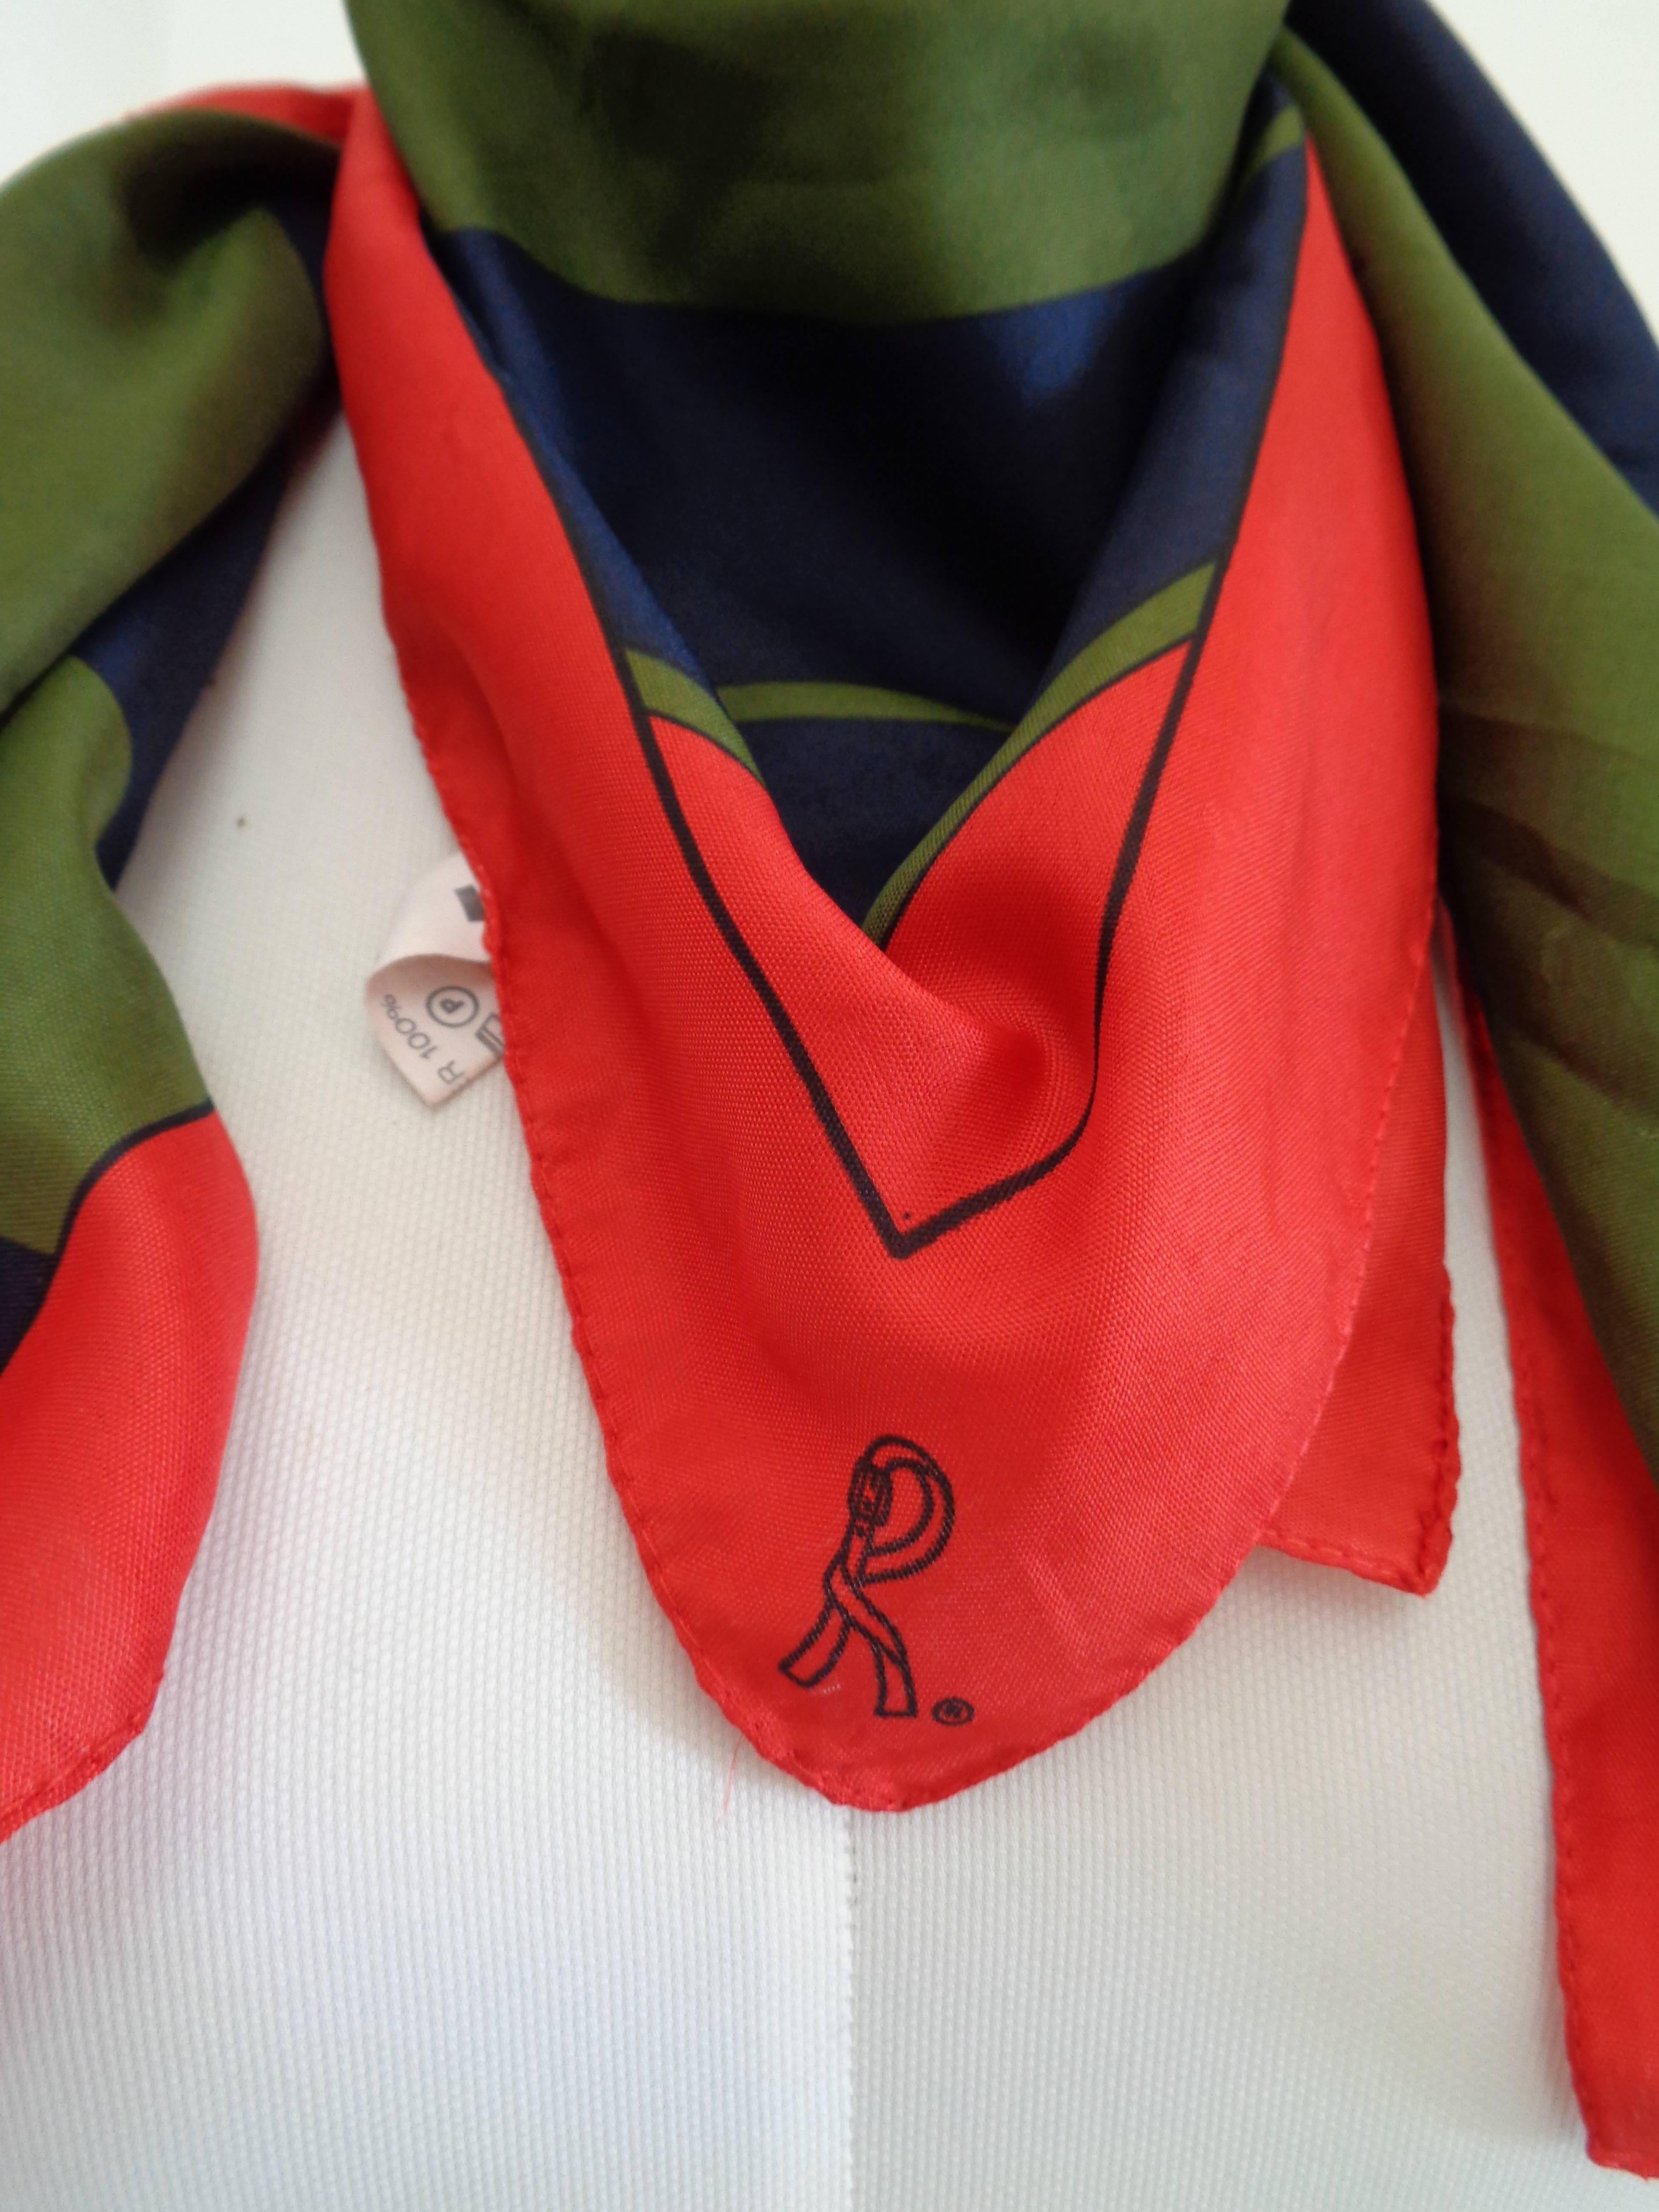 Roberta di Camerino Red Green Silk Foulard Scarf

Totally made in italy

Size 78 x 78 cm